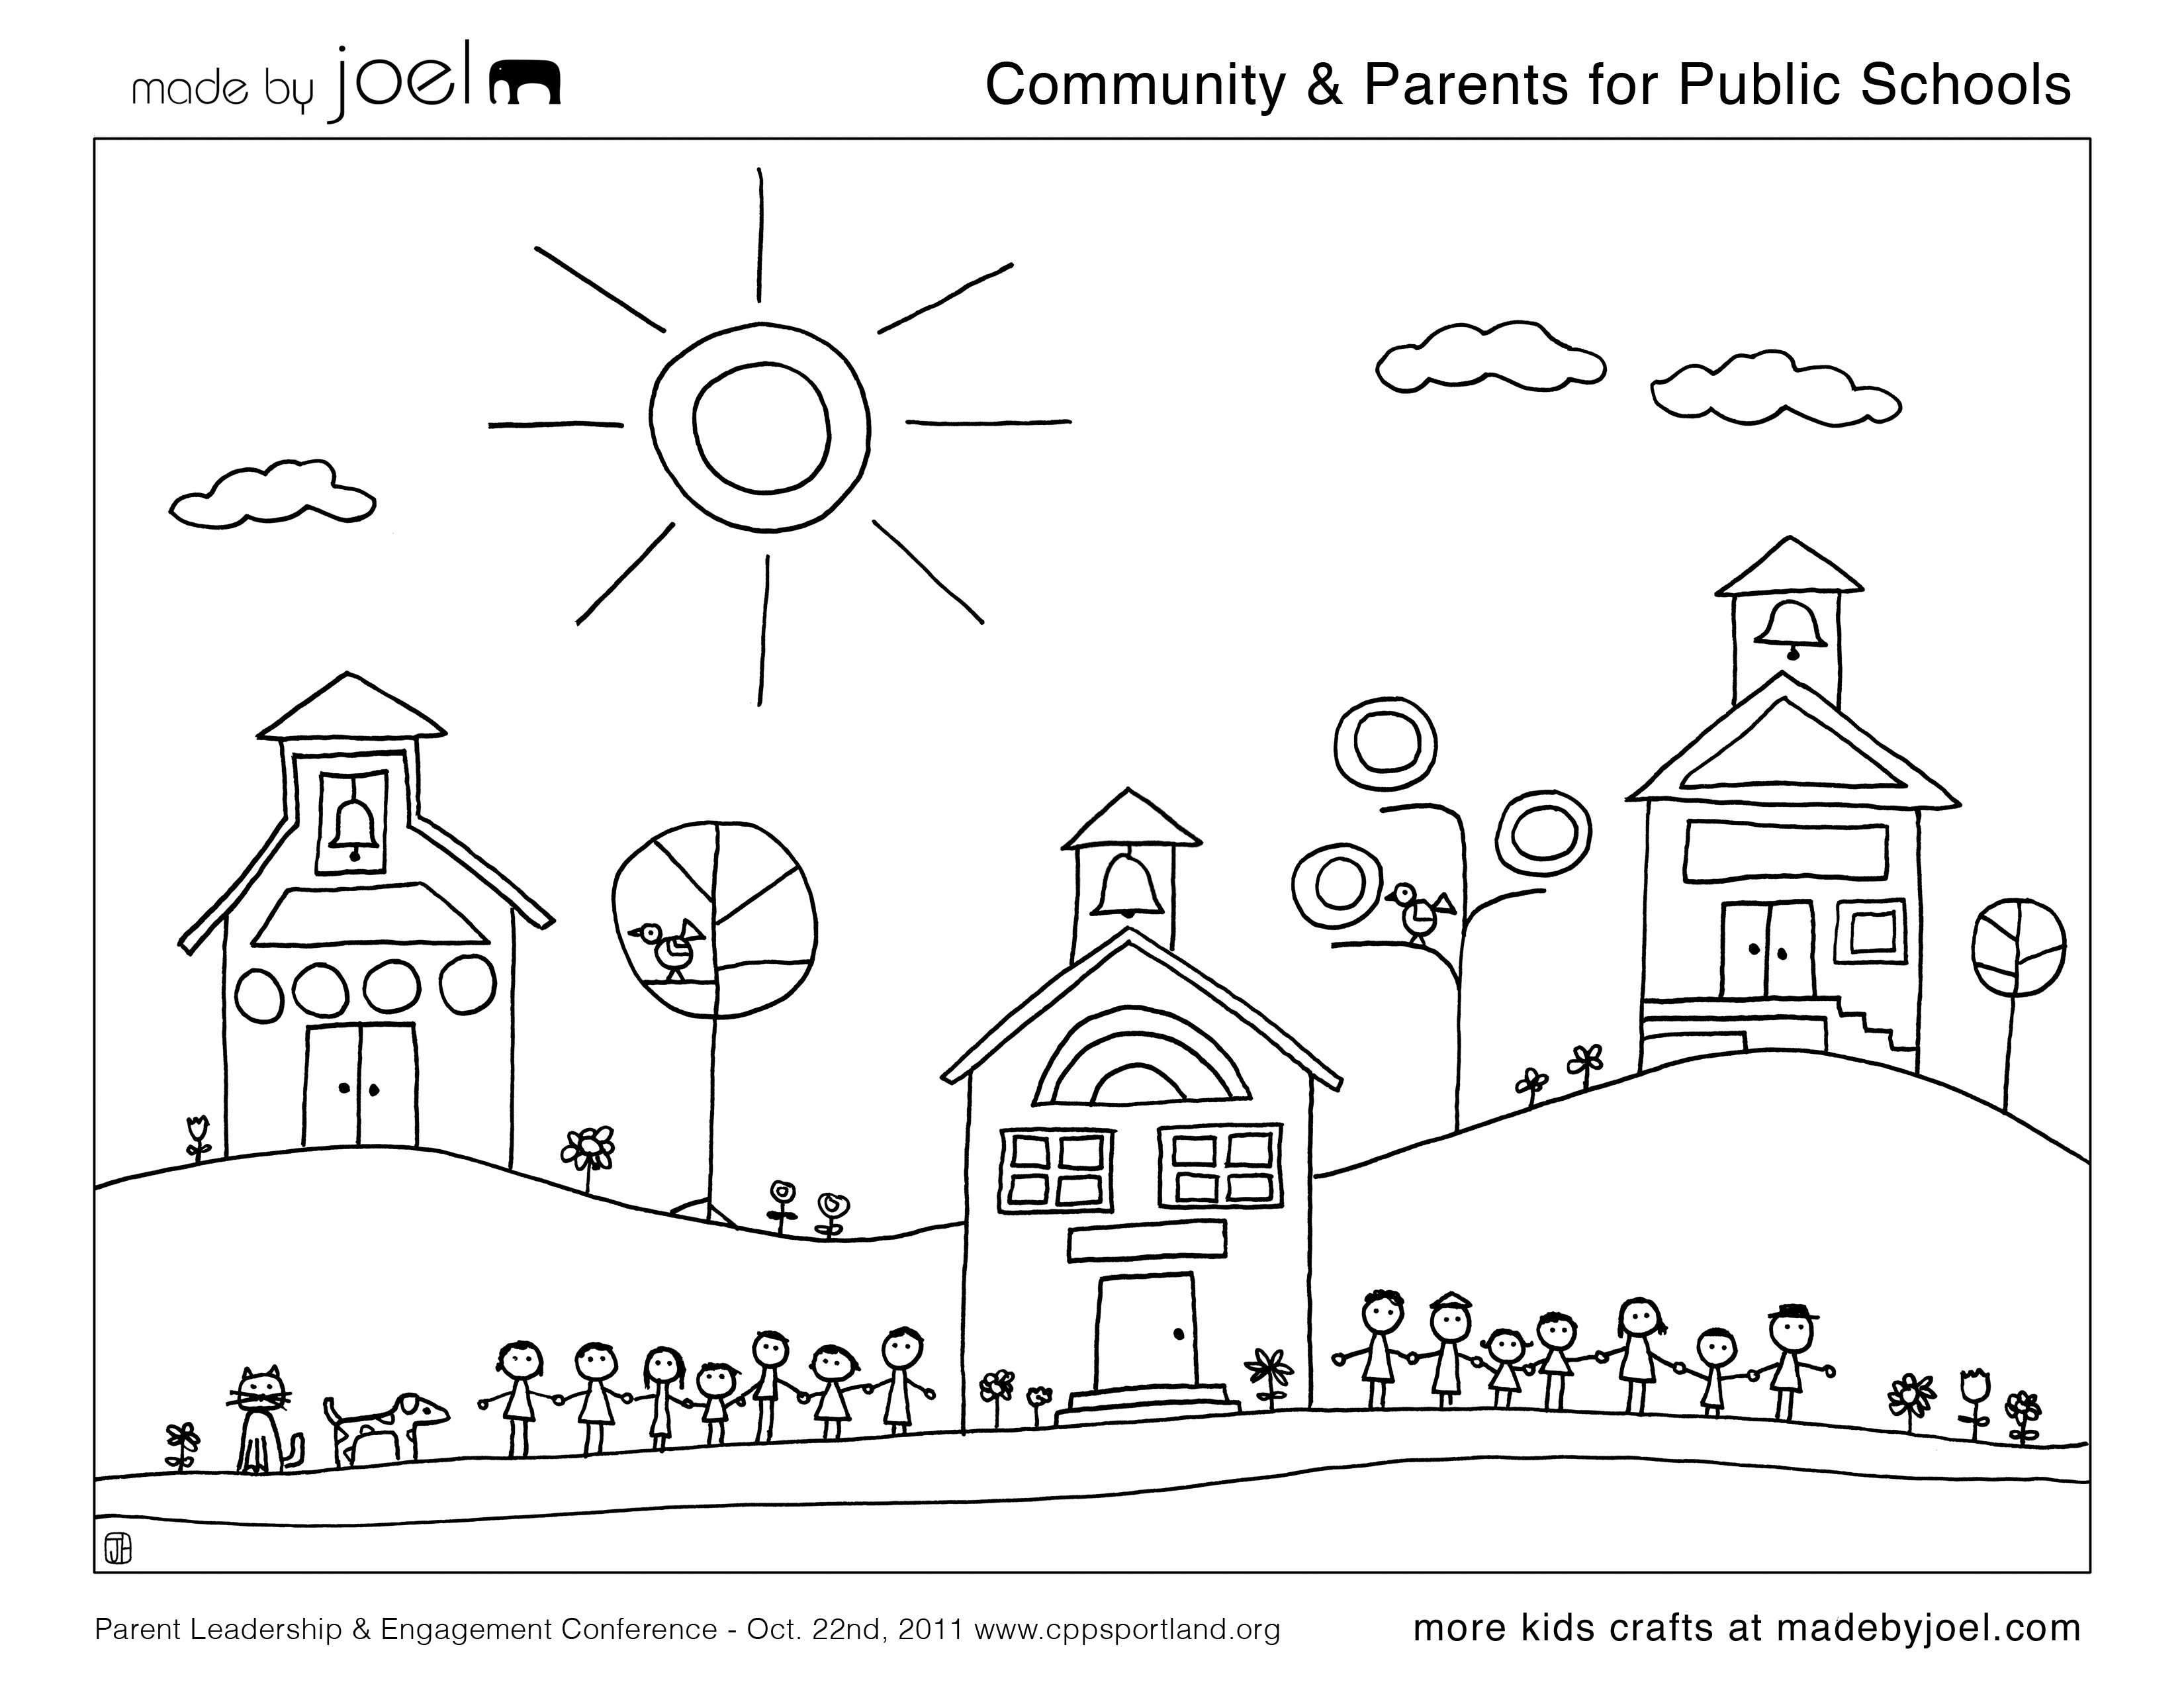 munity & Parents for Public Schools Coloring Sheet